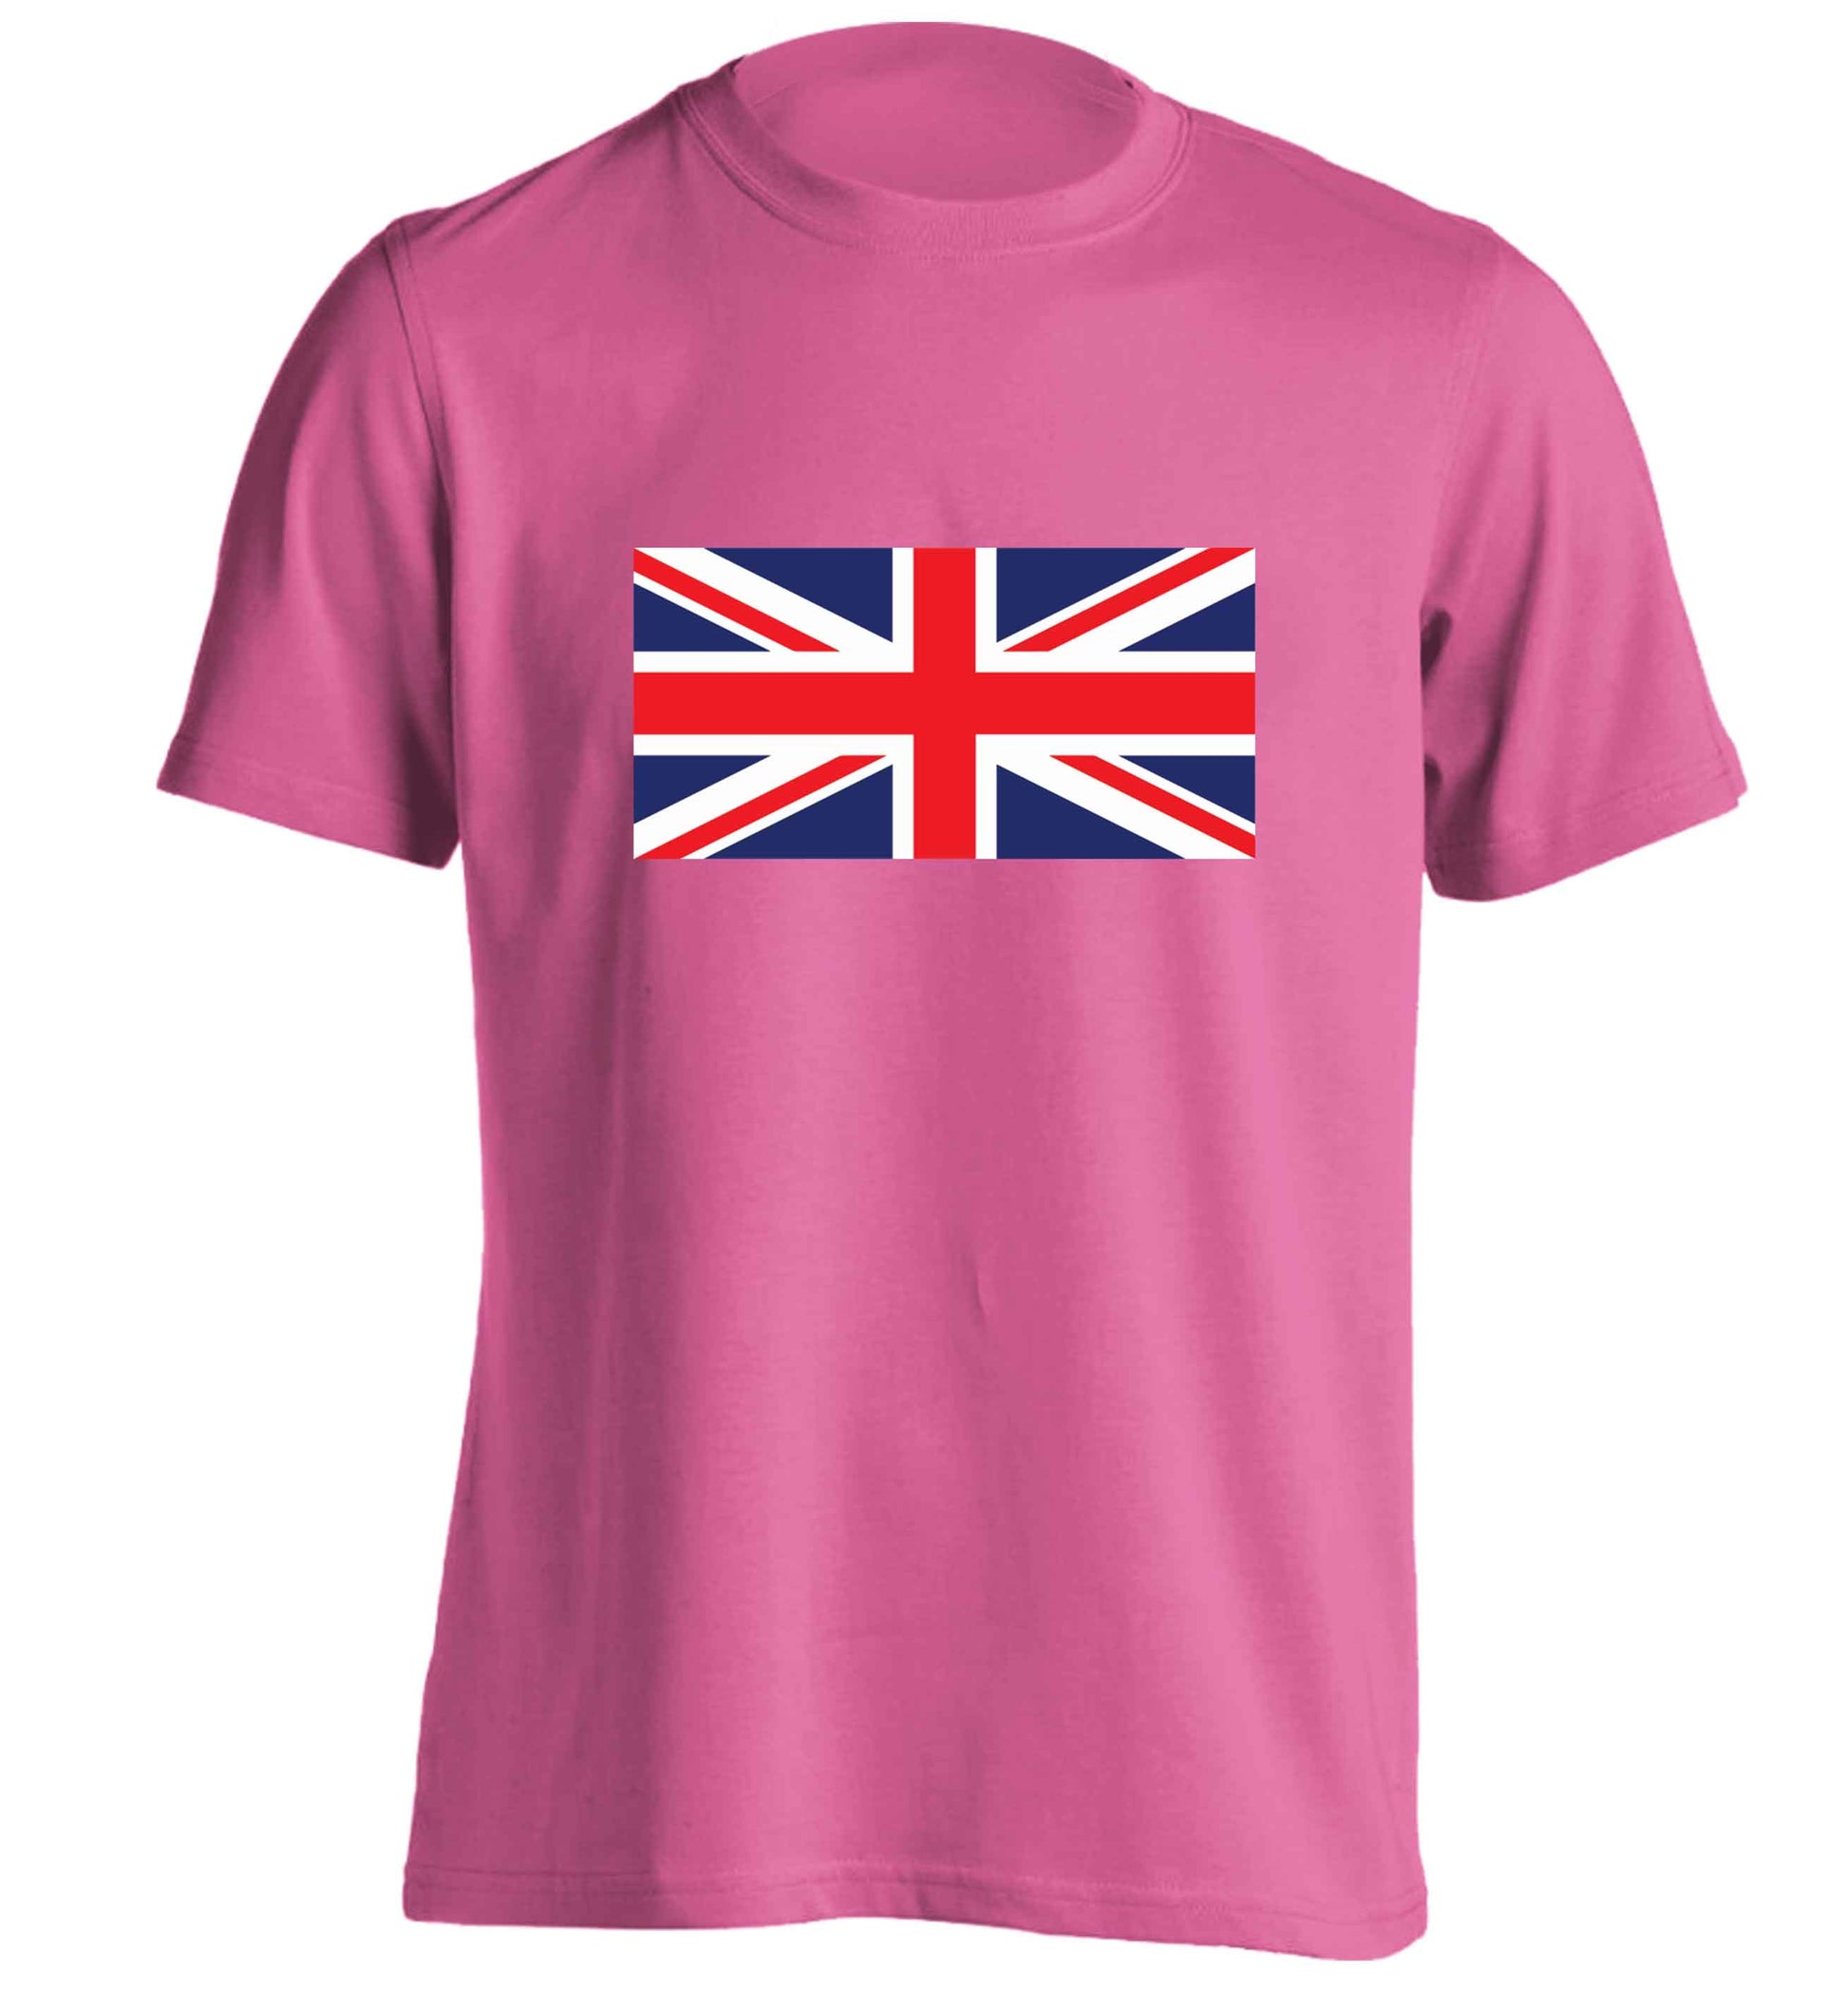 Union Jack adults unisex pink Tshirt 2XL